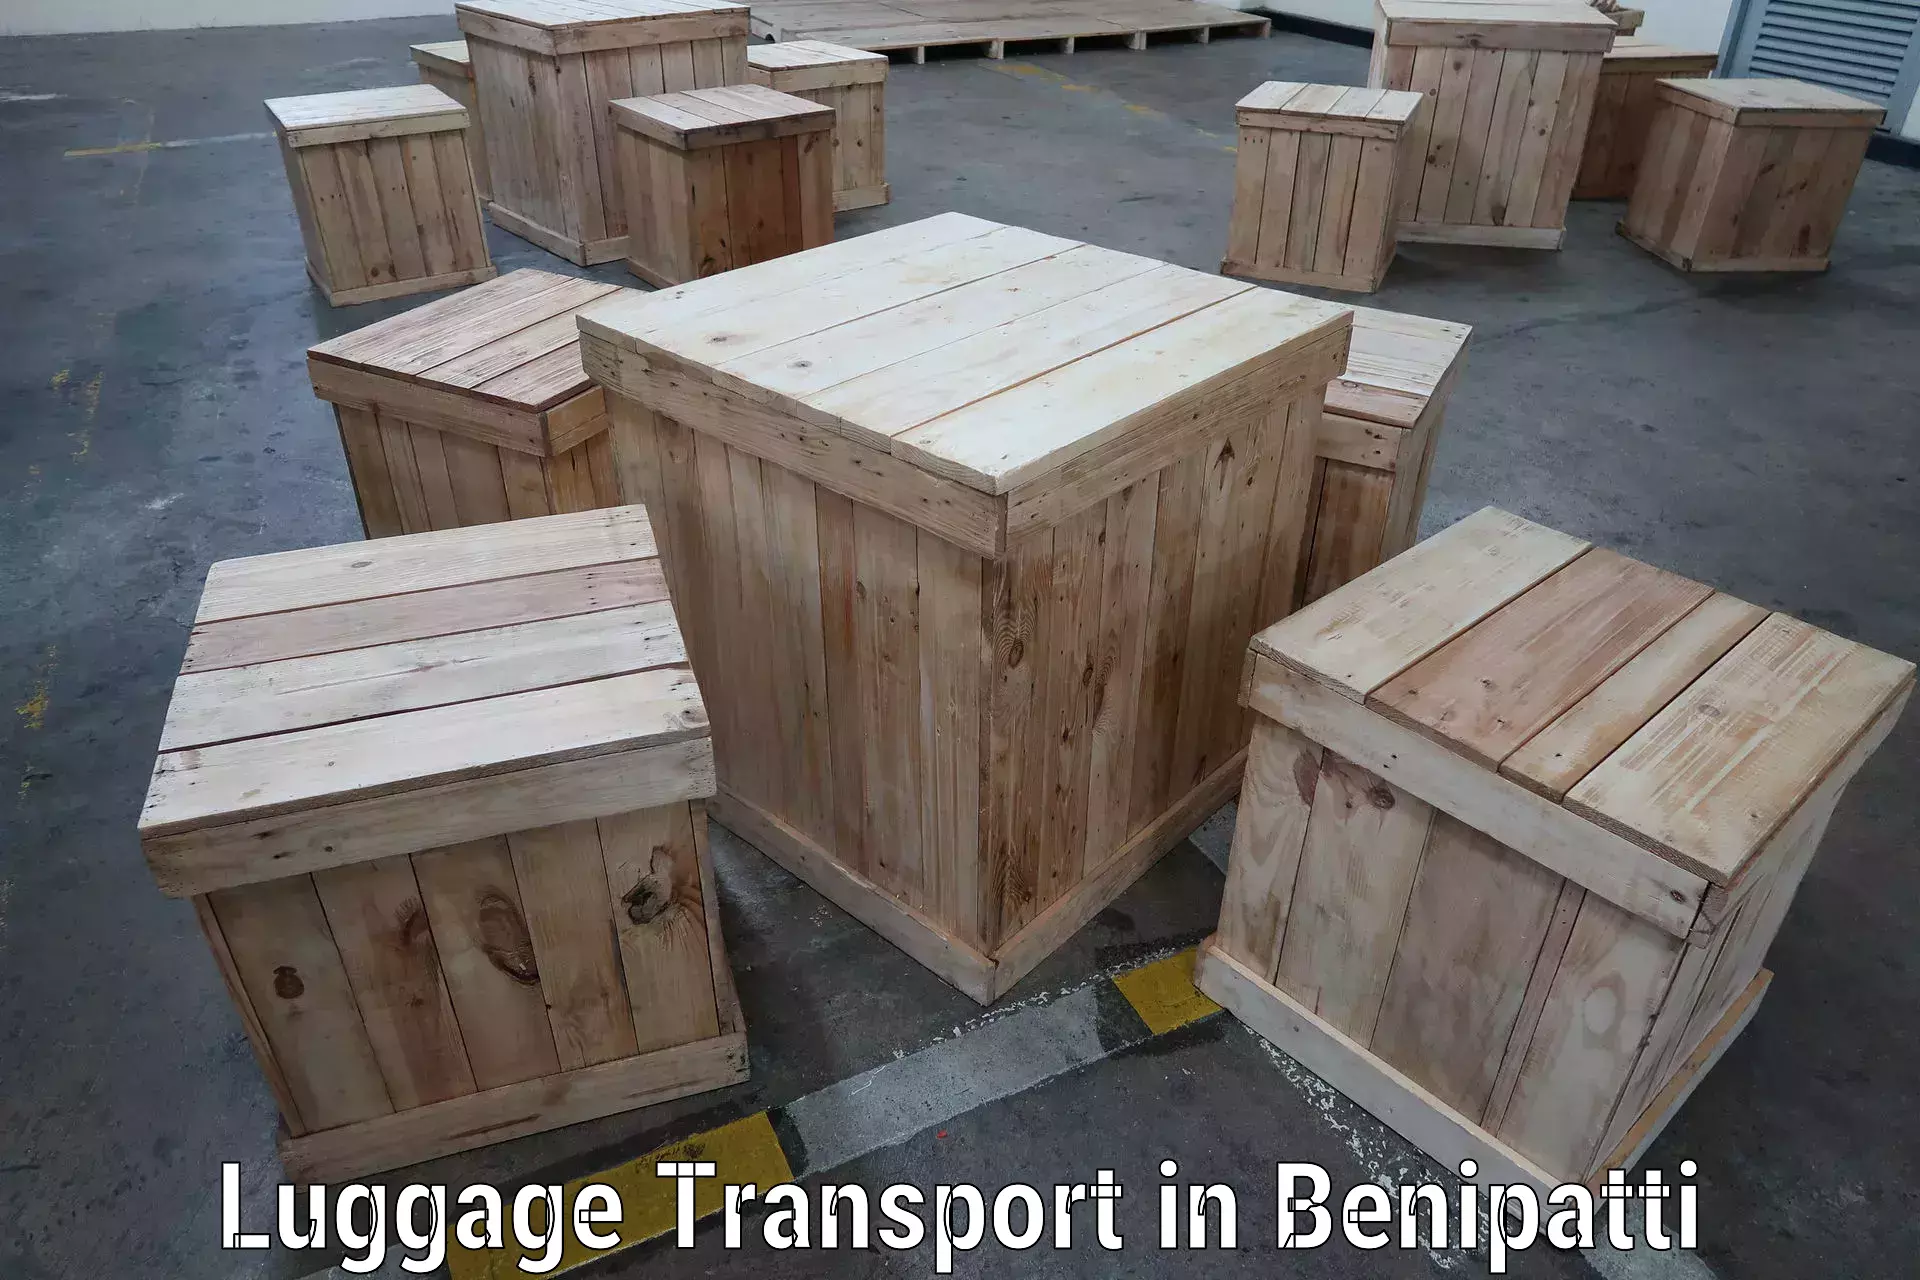 Luggage transport consulting in Benipatti